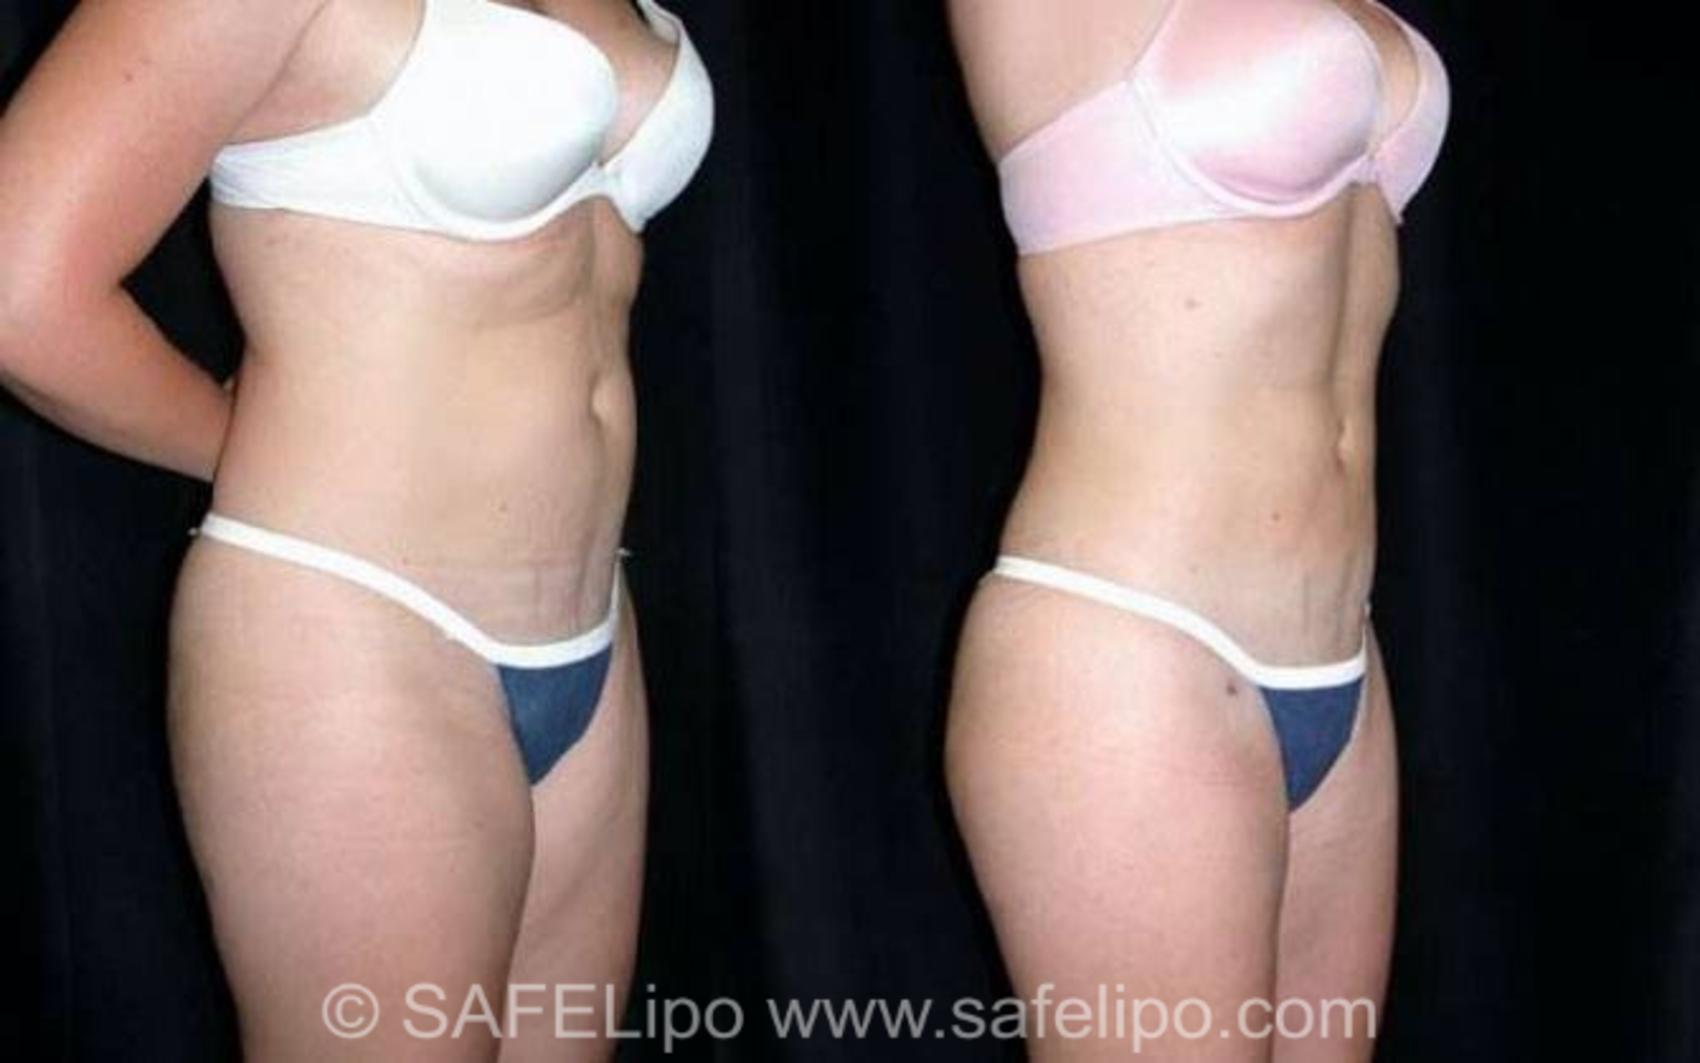 SAFELipoHD® Case 138 Before & After View #2 | SAFELipo®